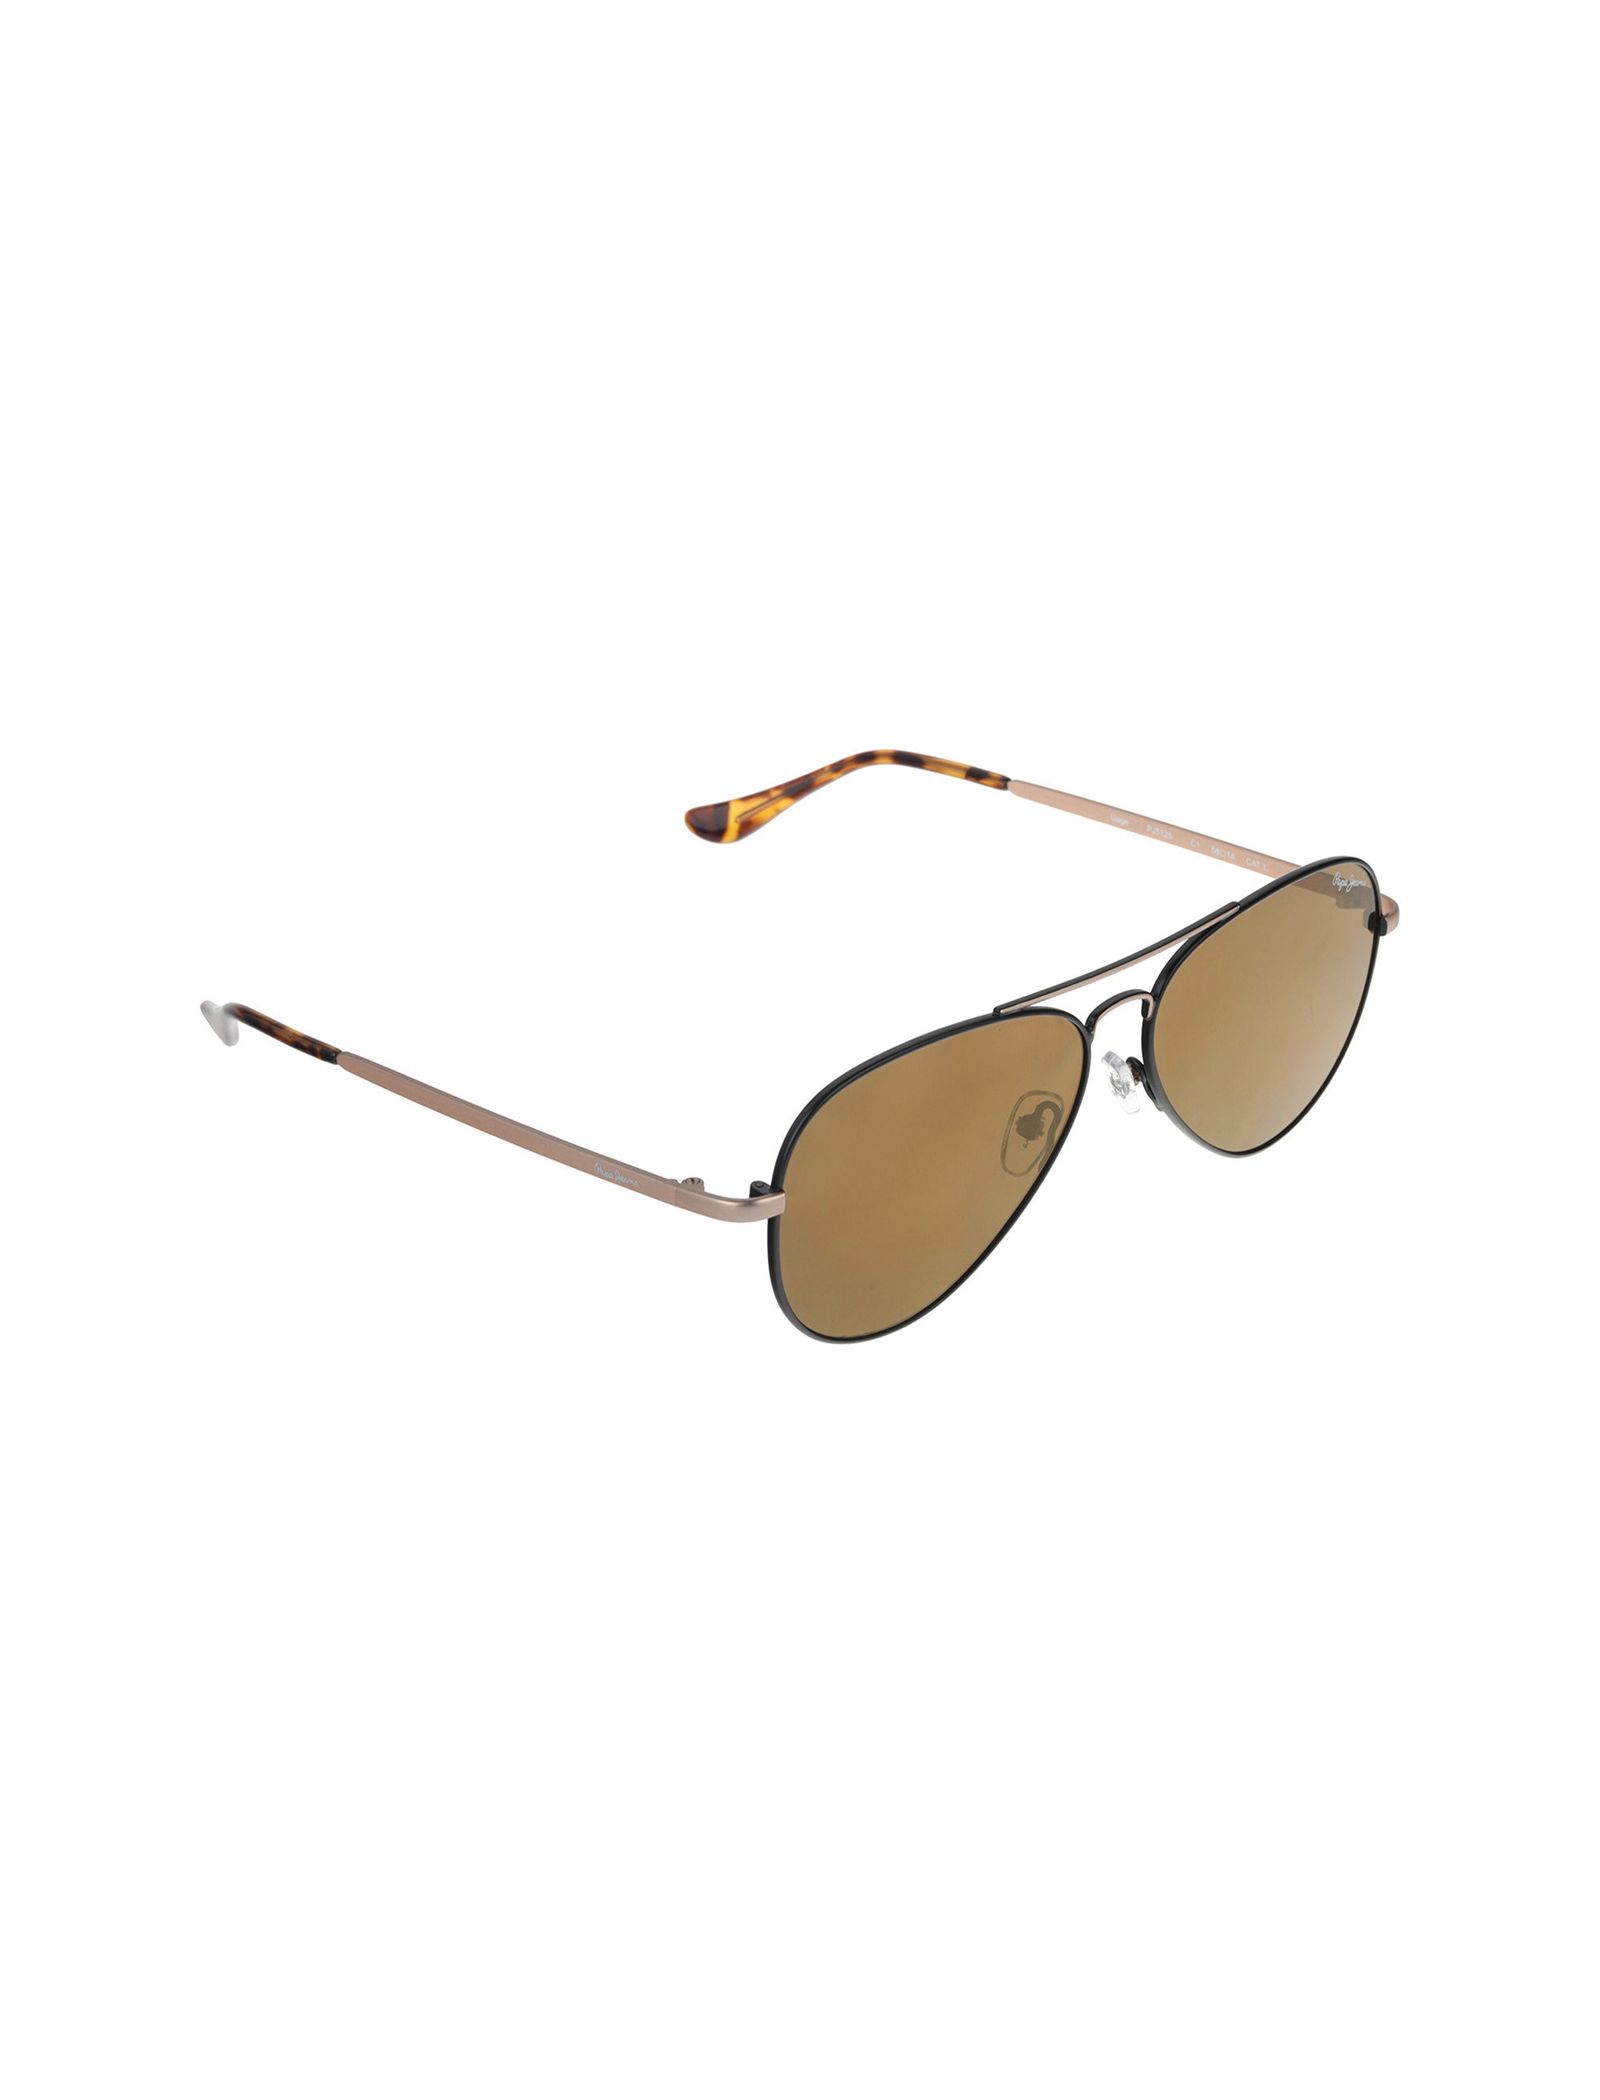 عینک آفتابی خلبانی زنانه - پپه جینز - مشکي و طلايي - 3